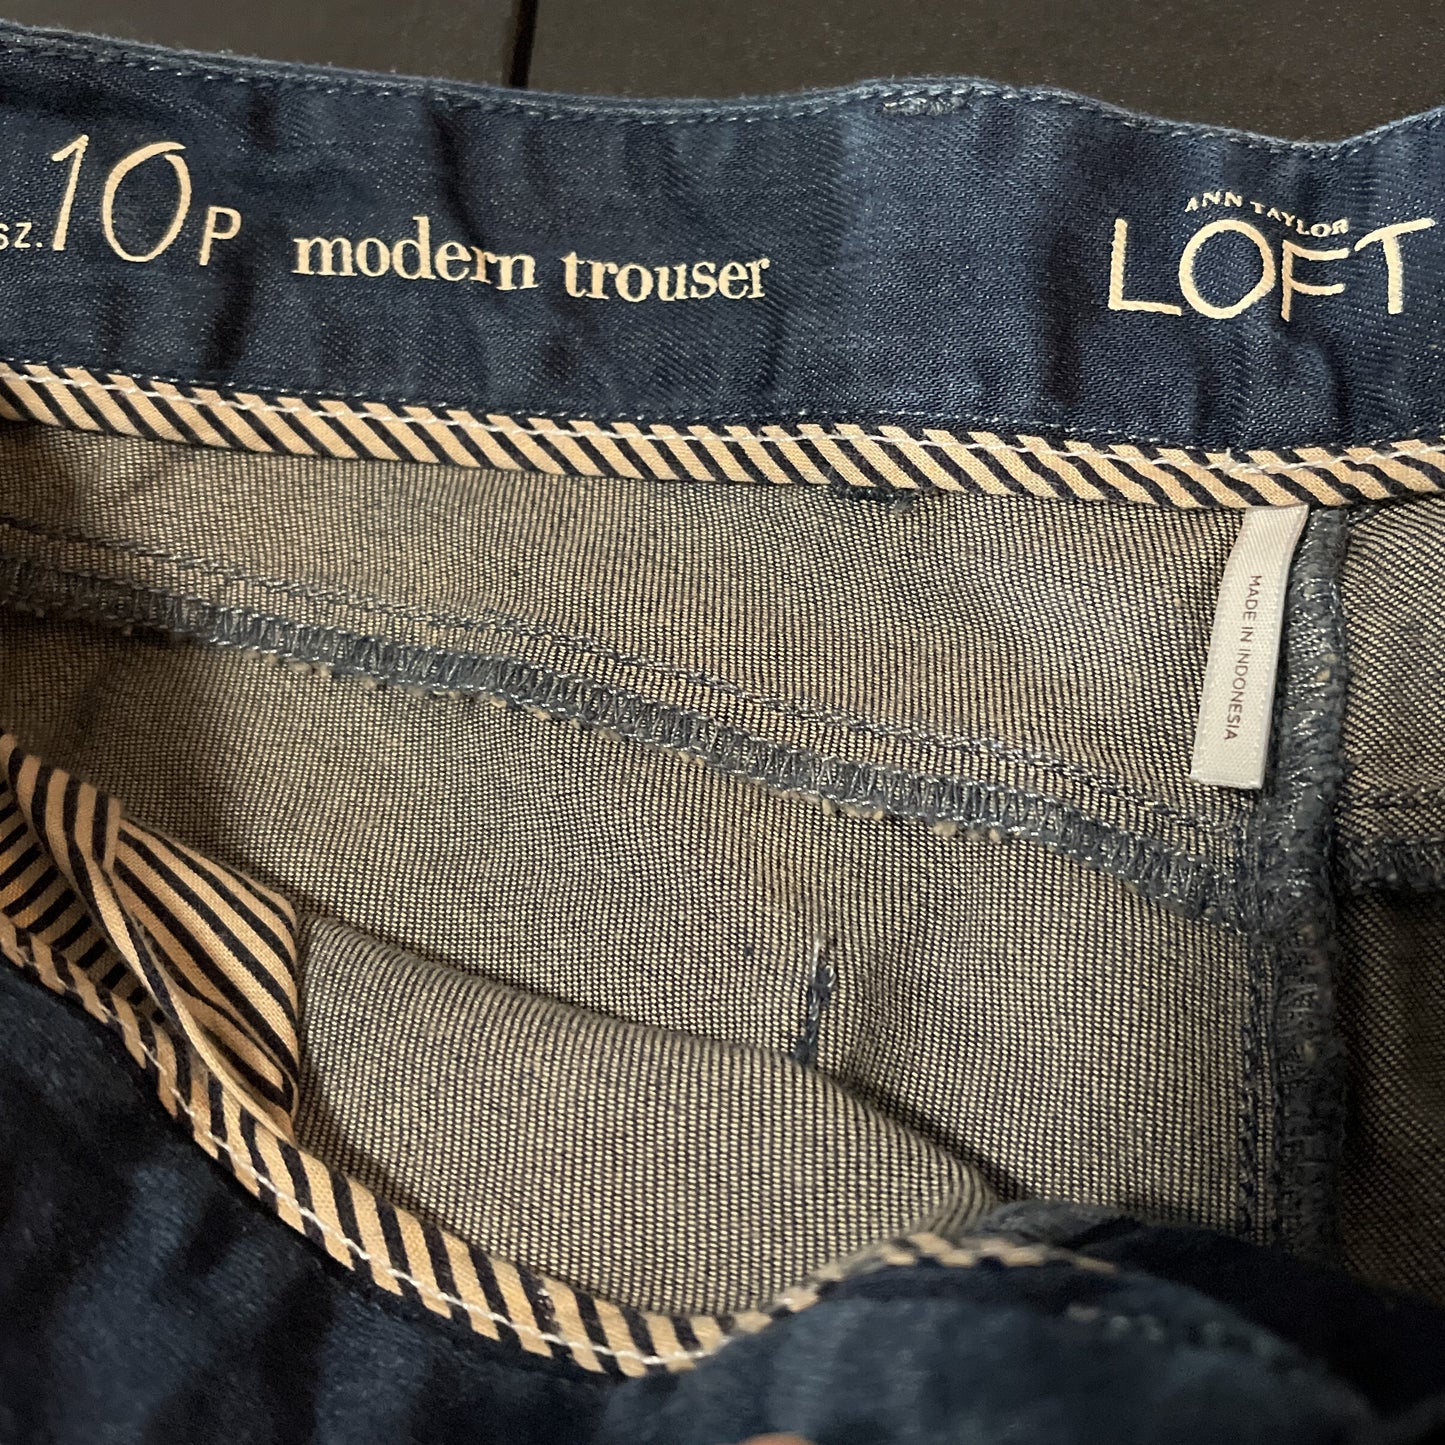 Ann Taylor LOFT | Denim Modern Trouser | Sz 10P